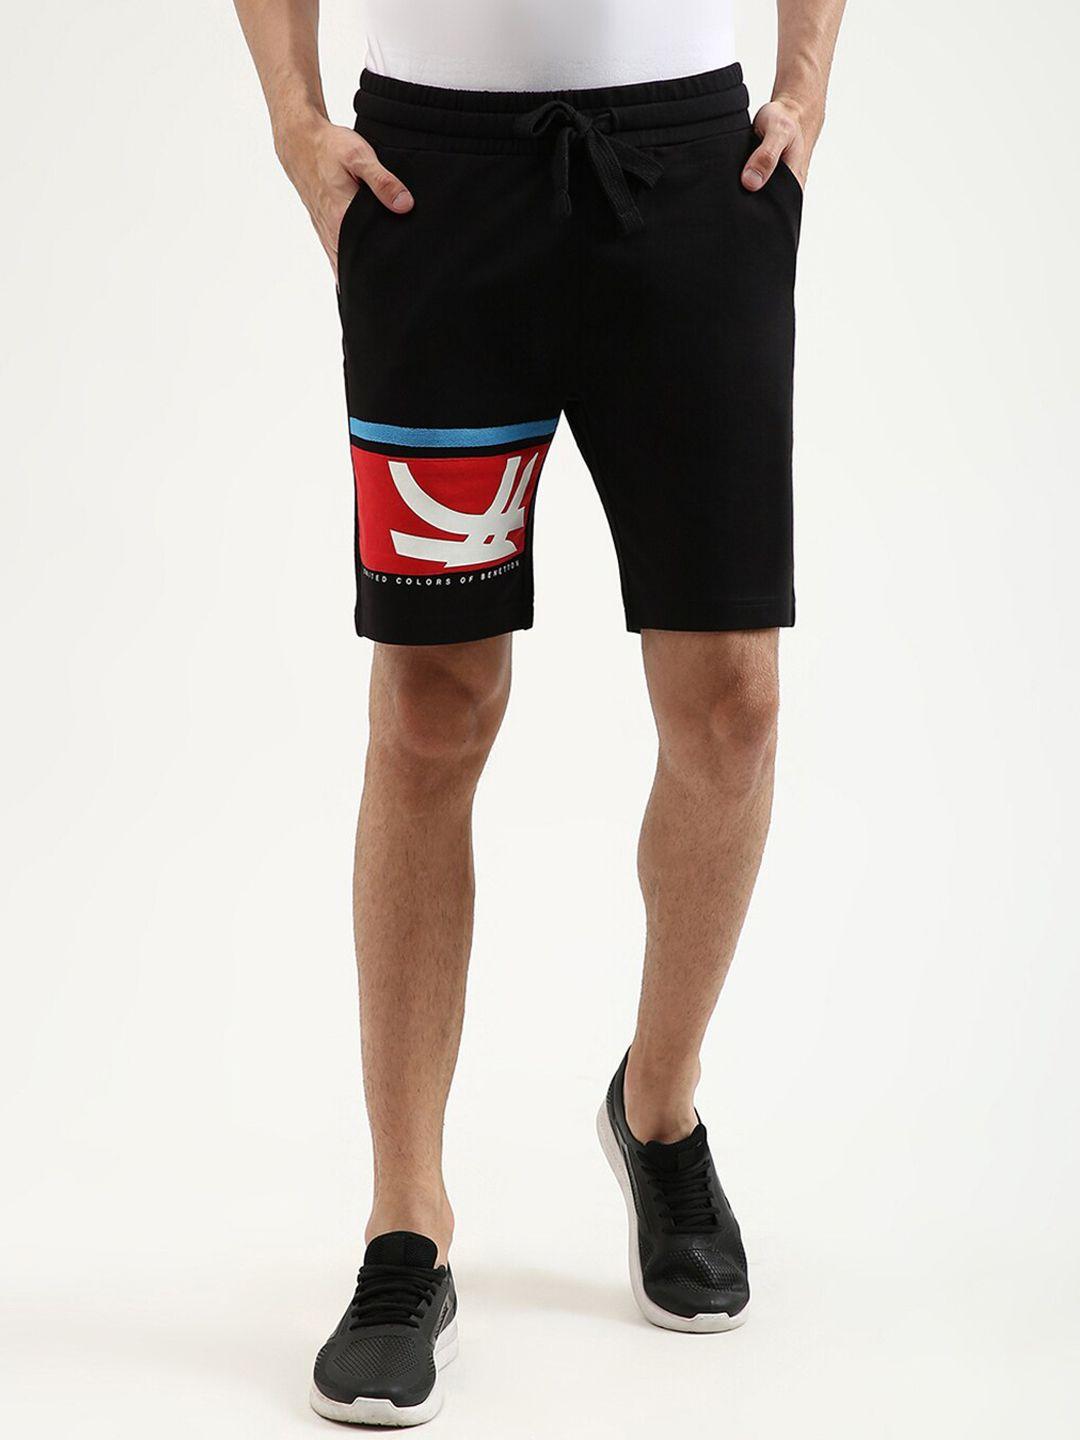 united-colors-of-benetton-men-black-printed-cotton-shorts